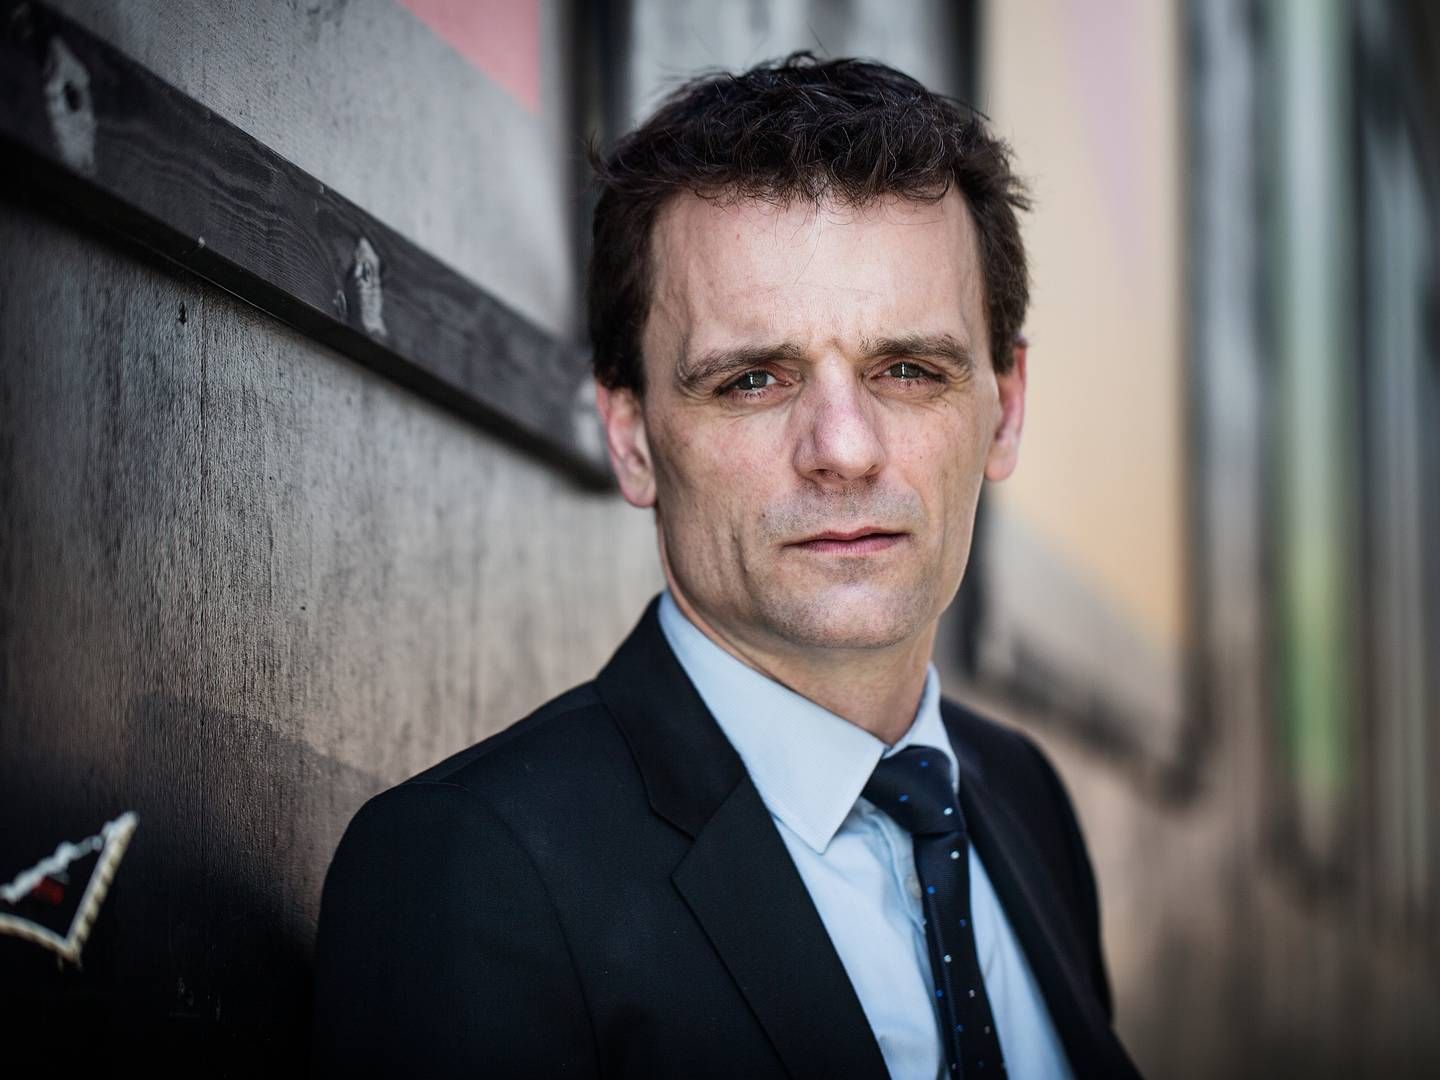 Thomas Torp stopper som adm. direktør i Grakom efter ni år i stillingen. | Foto: Niels Hougaard/Jyllands-Posten/Ritzau Scanpix